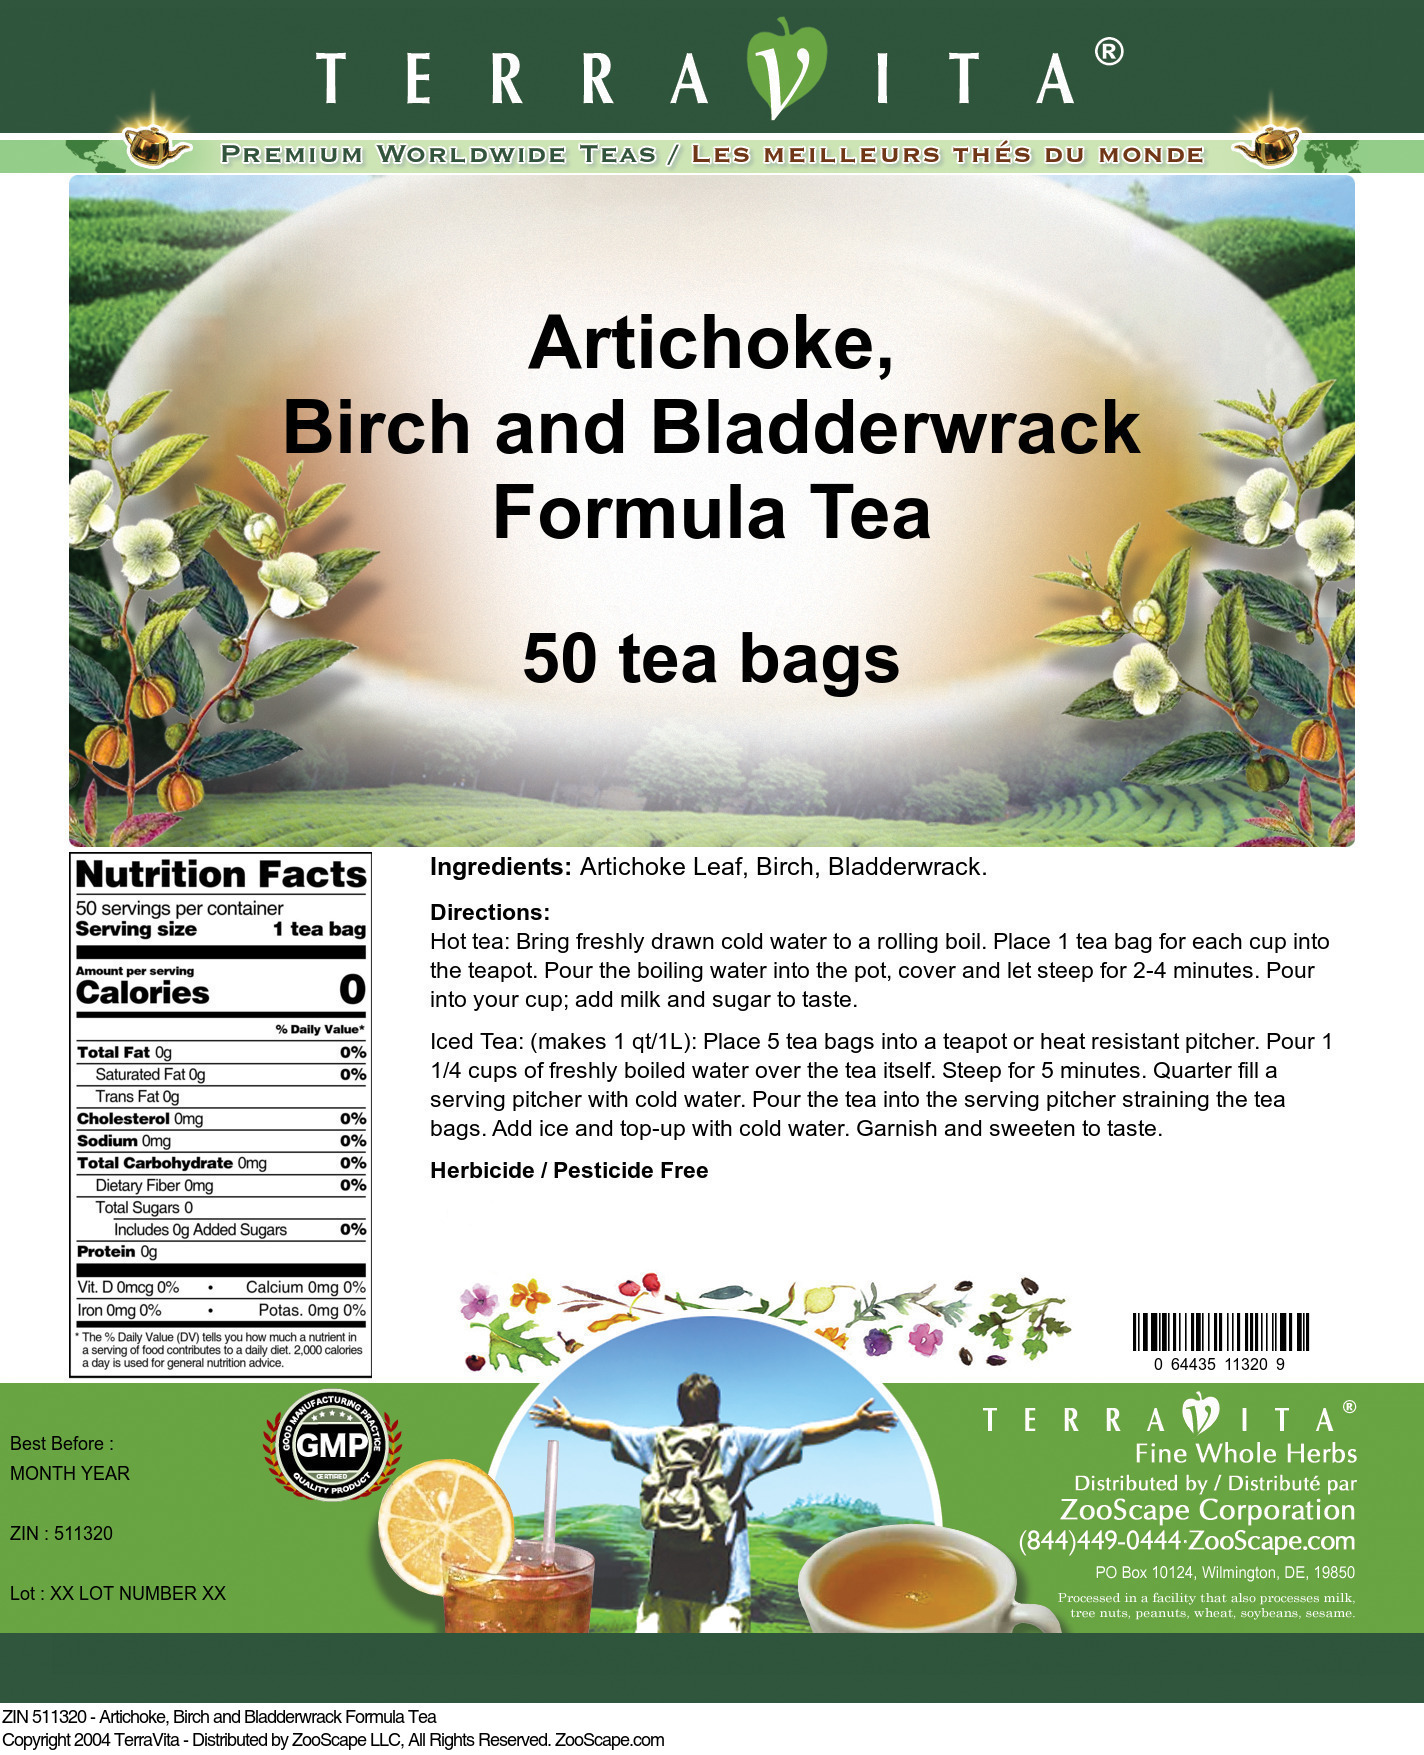 Artichoke, Birch and Bladderwrack Formula Tea - Label